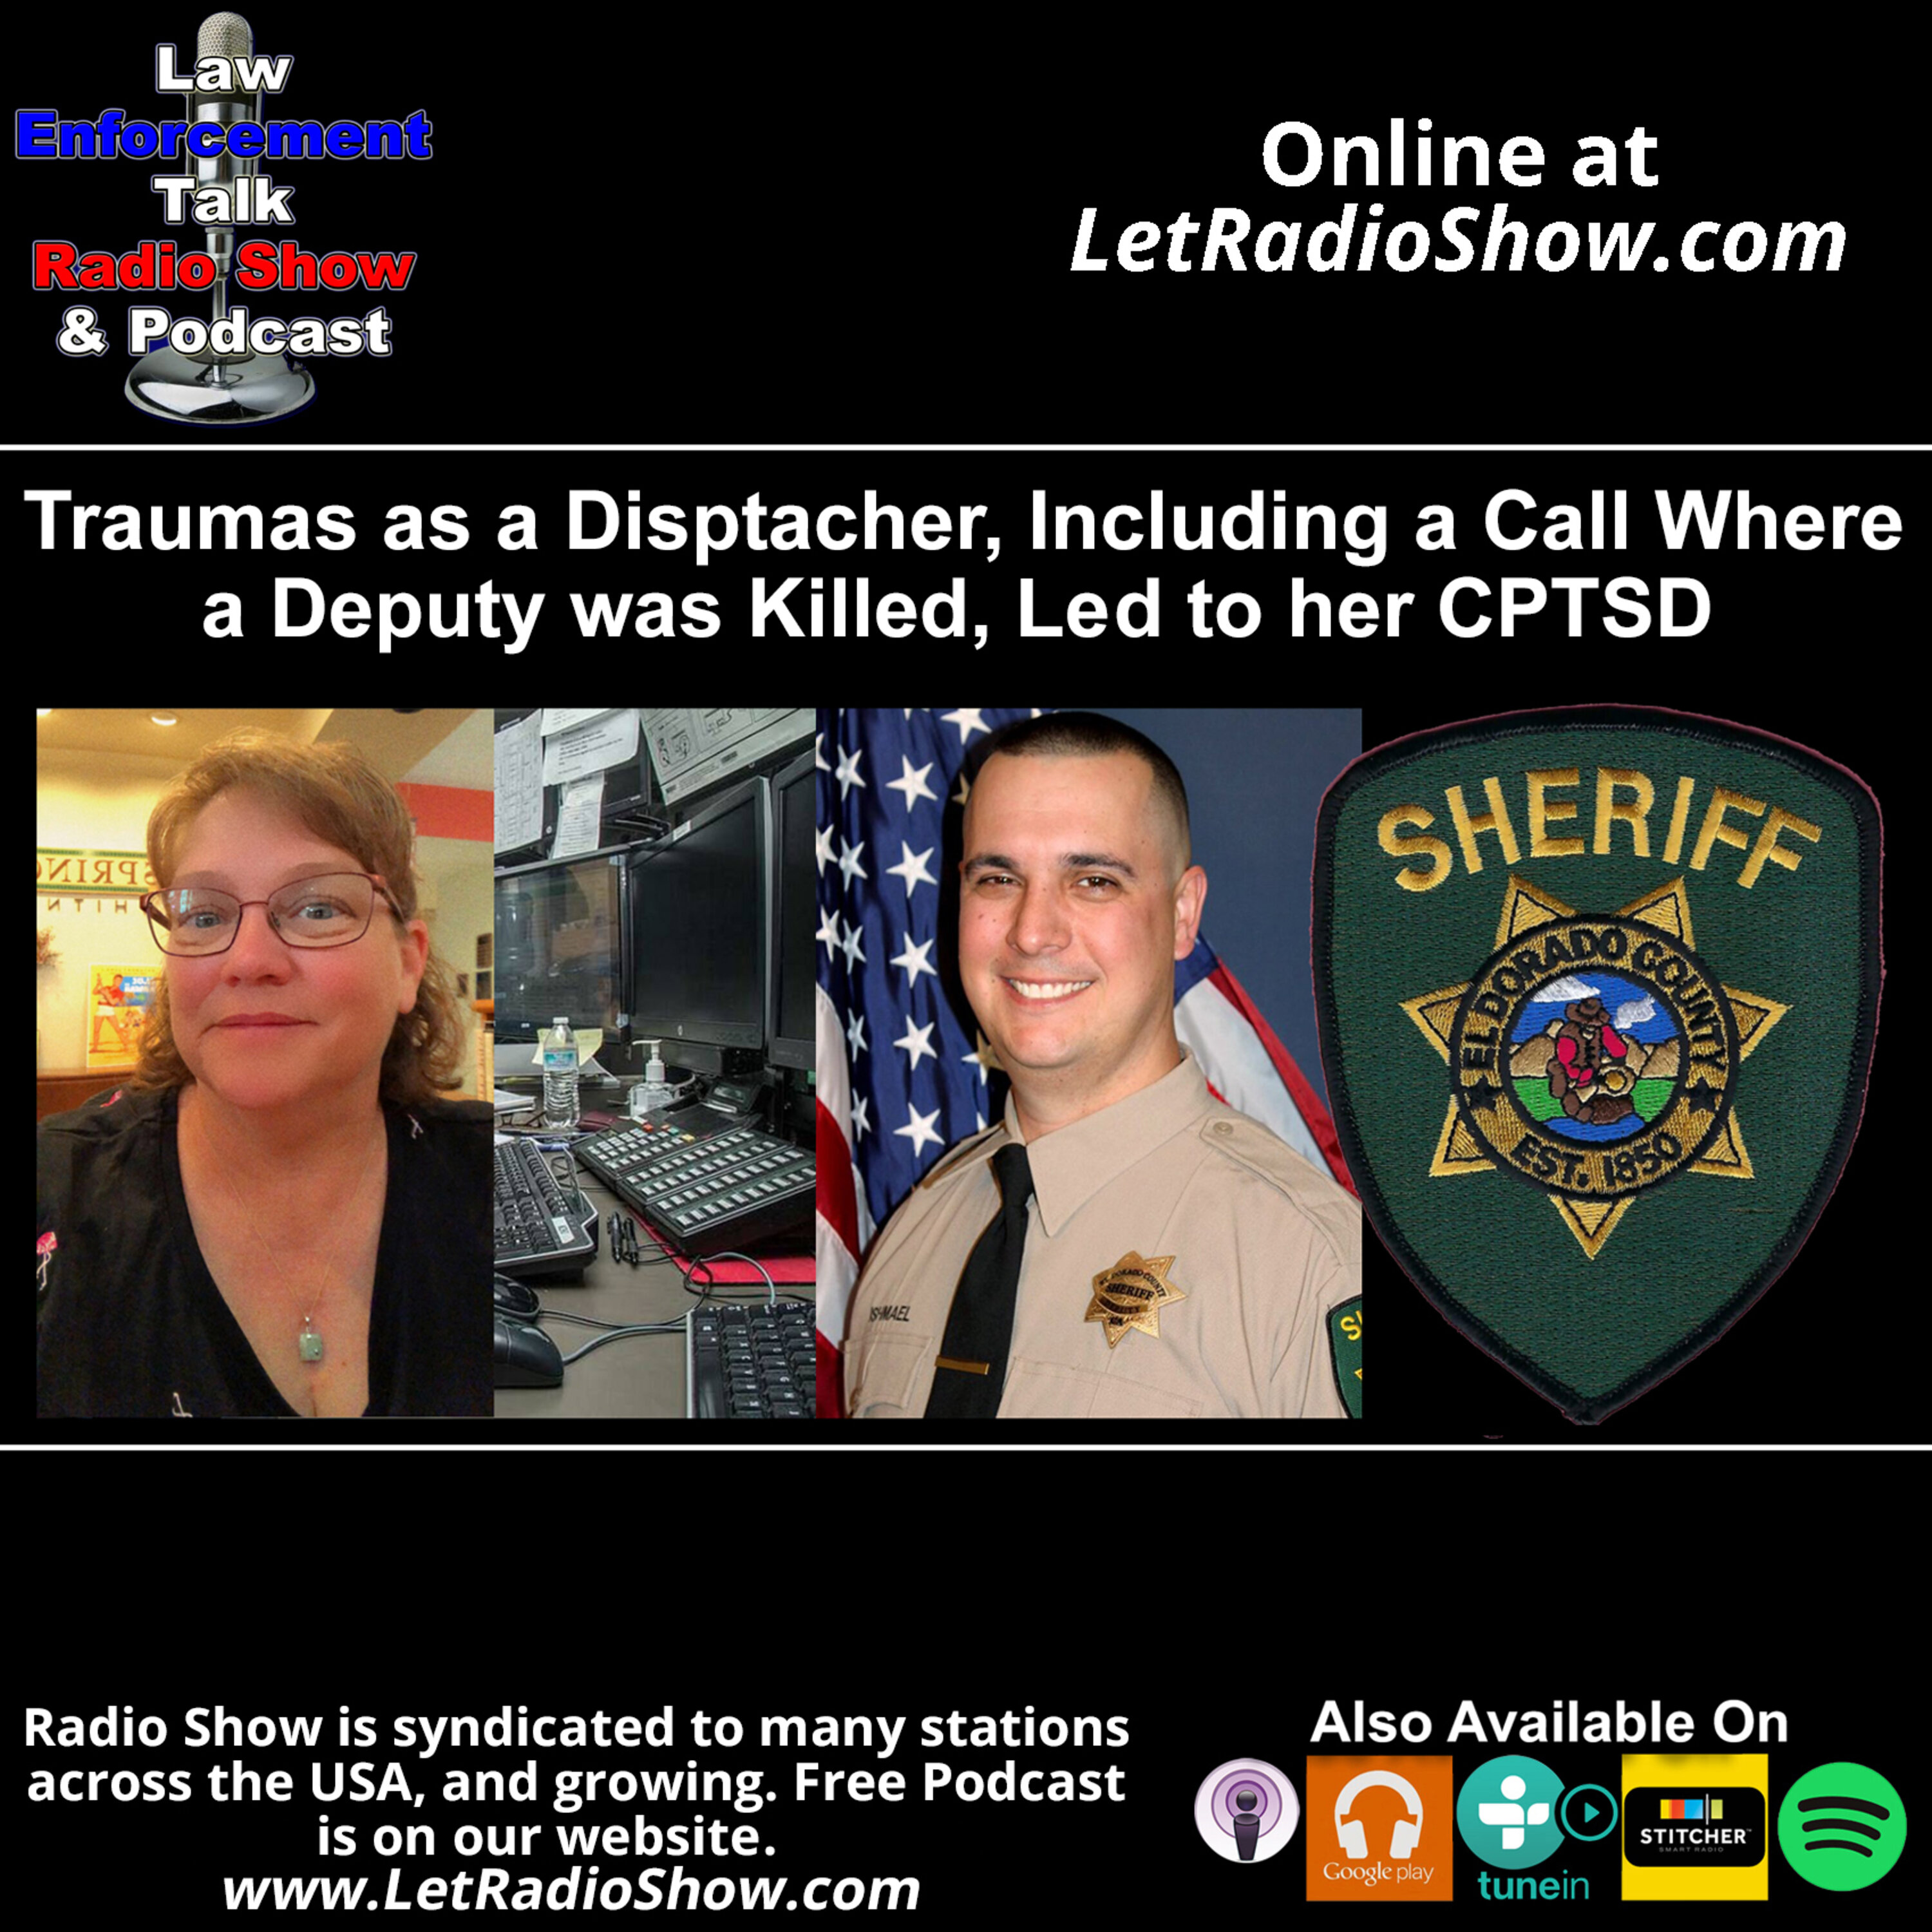 Traumas as a Disptacher, a Call Where a Deputy was Killed, Led to her CPTSD